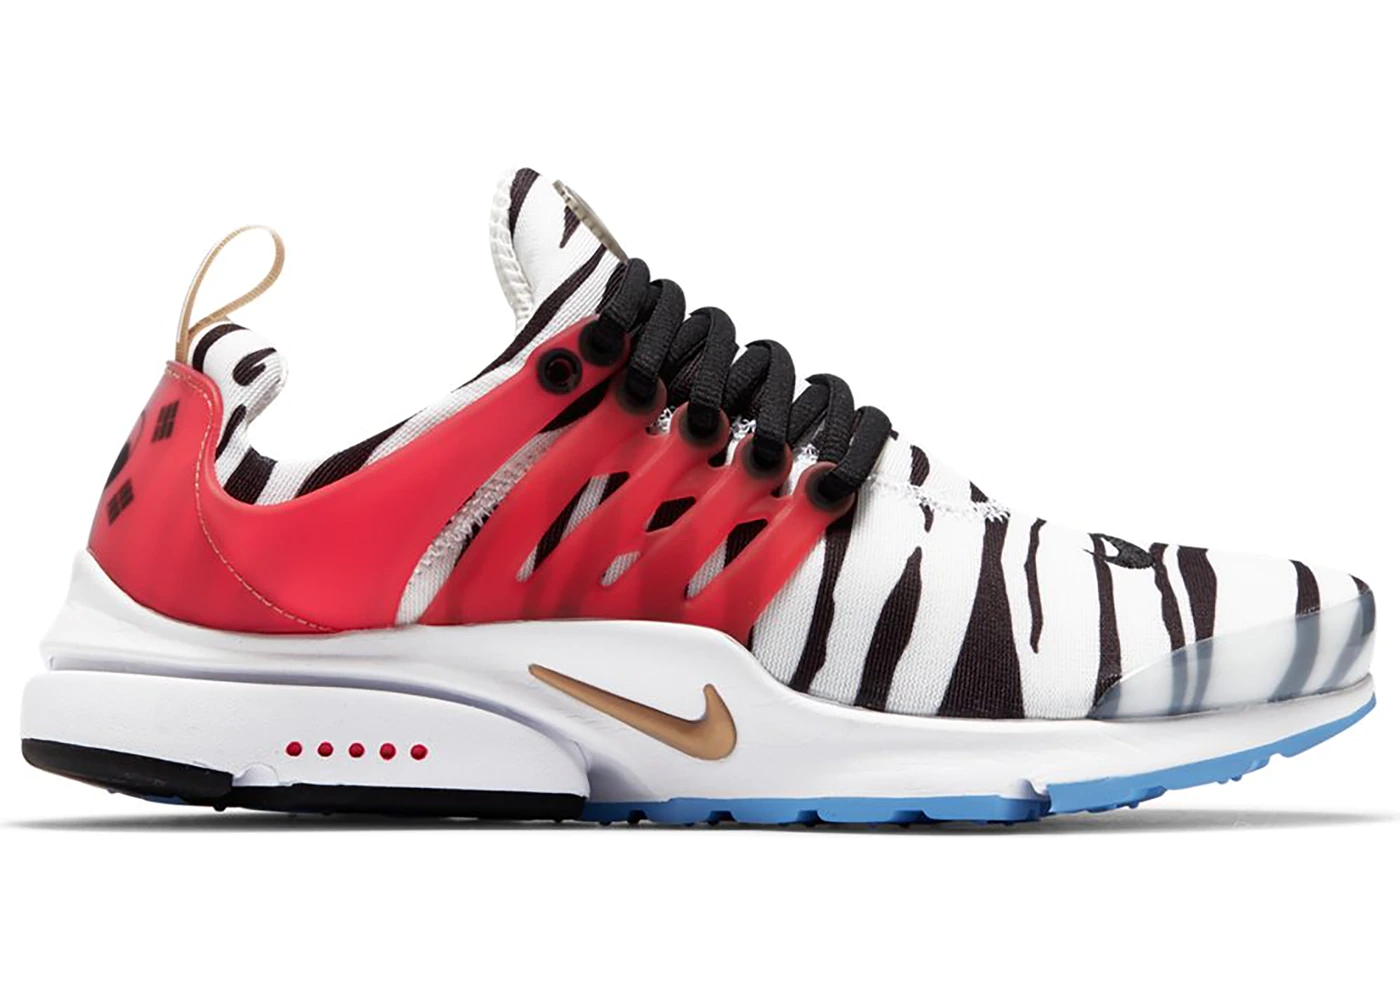 Now Available: Nike Air Presto "Korea" — Sneaker Shouts